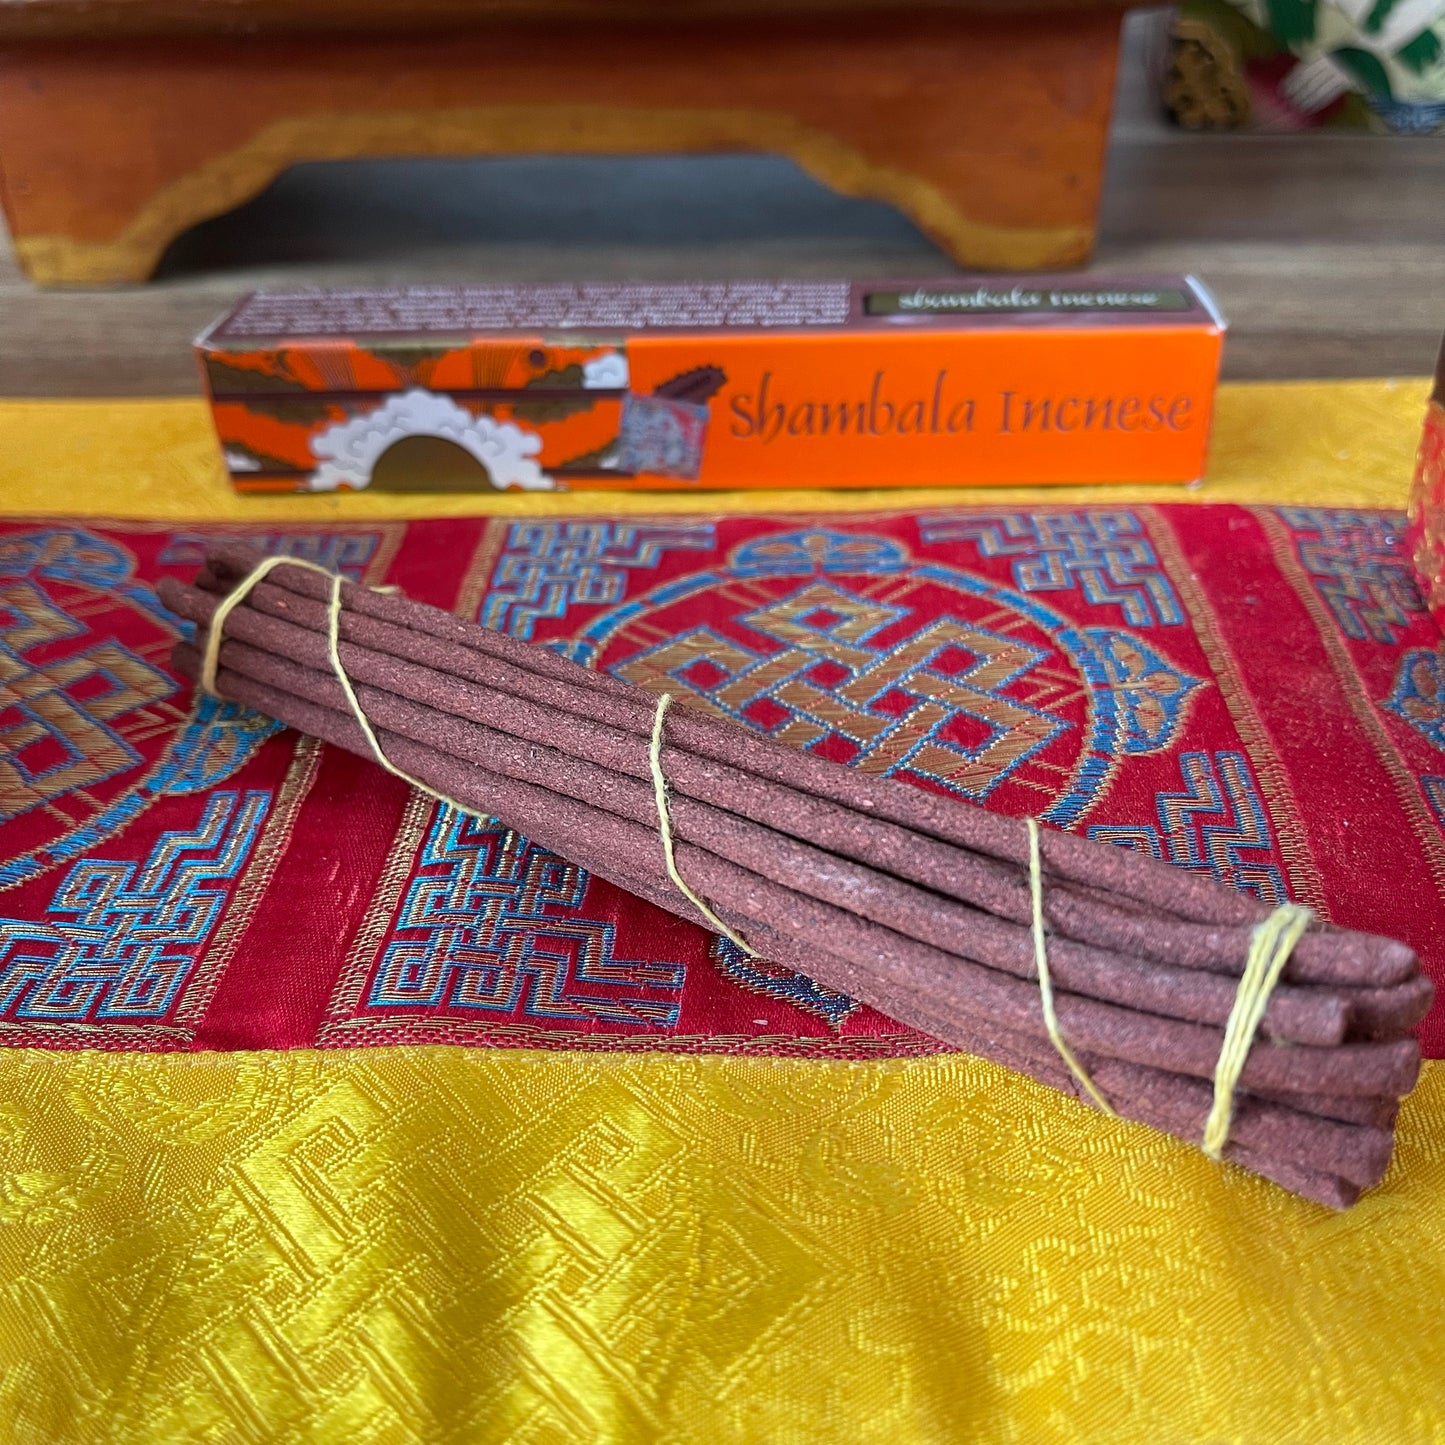 Shambala Tibetan Incense sticks (approx. 18 Incense Sticks)